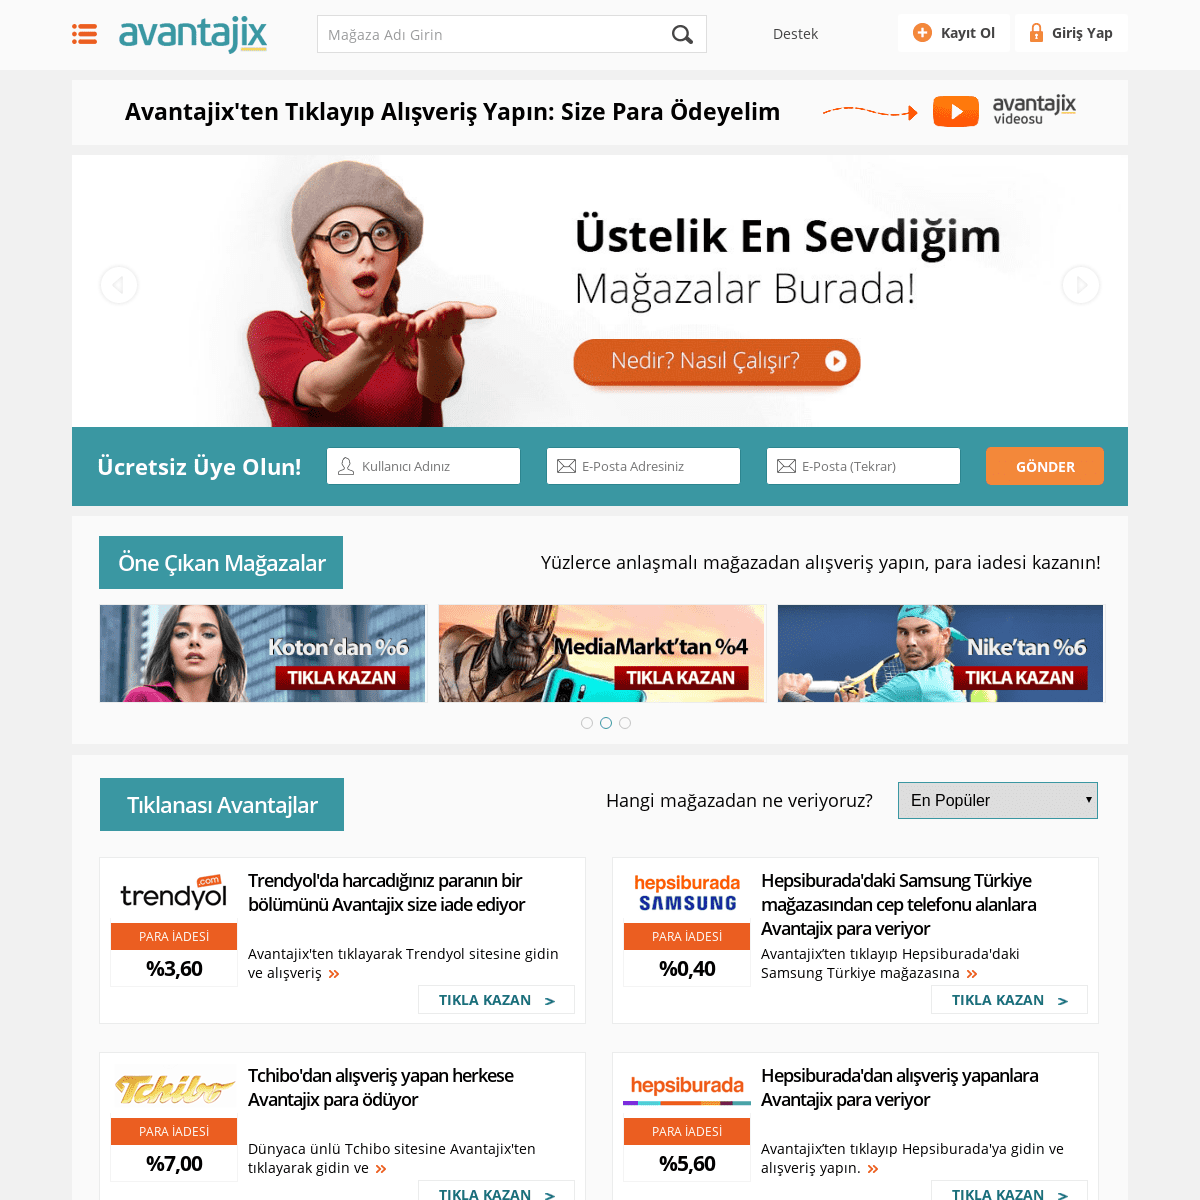 A complete backup of avantajix.com